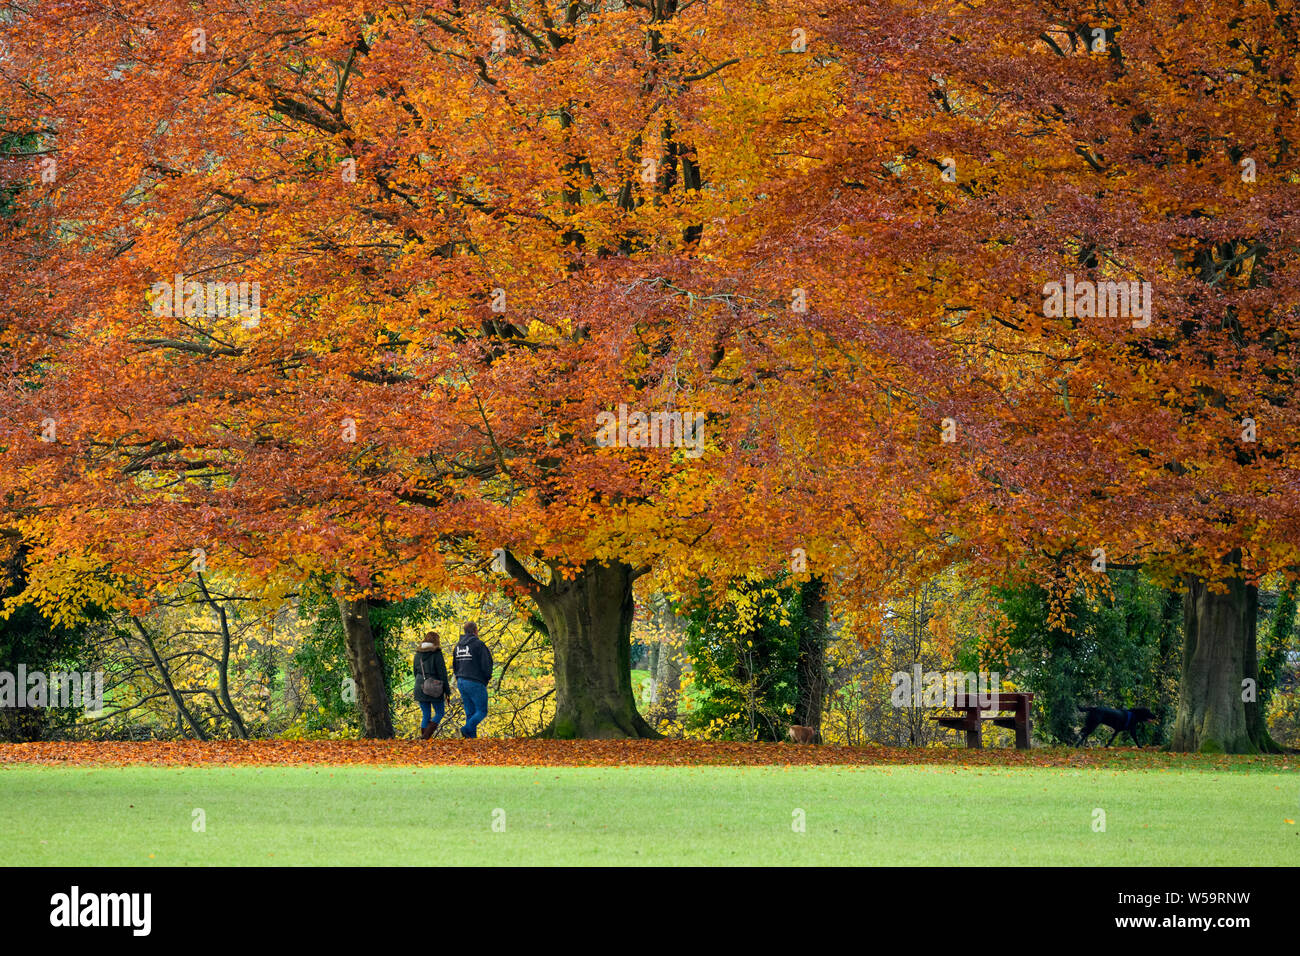 Couple walking dog under enormous, spreading beech trees displaying vivid autumn colours - scenic Ilkley Park, Ilkley, West Yorkshire, England, UK. Stock Photo